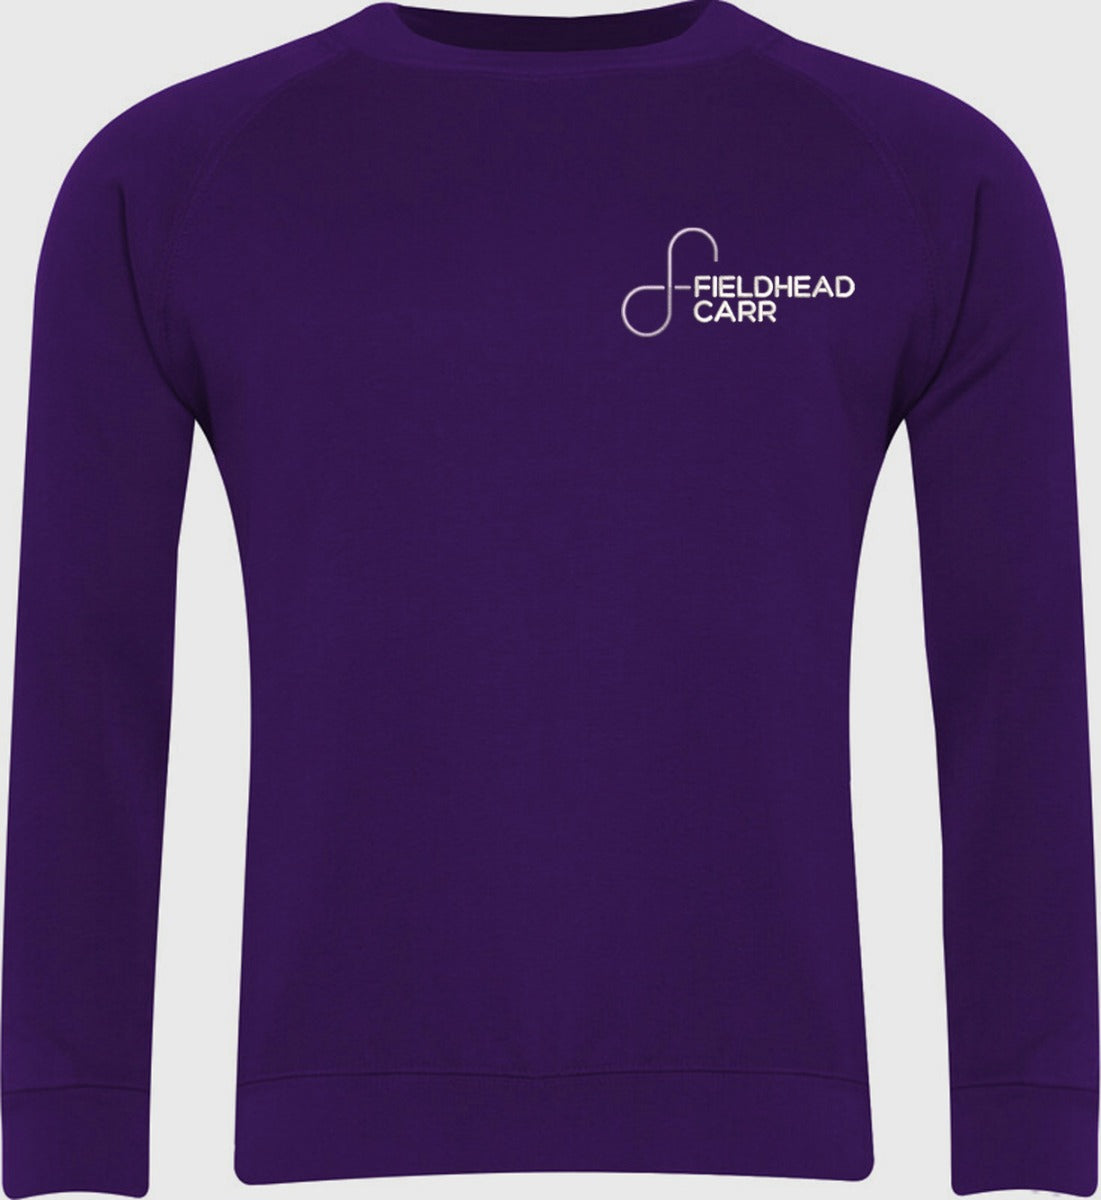 Fieldhead Carr Primary Sweatshirt